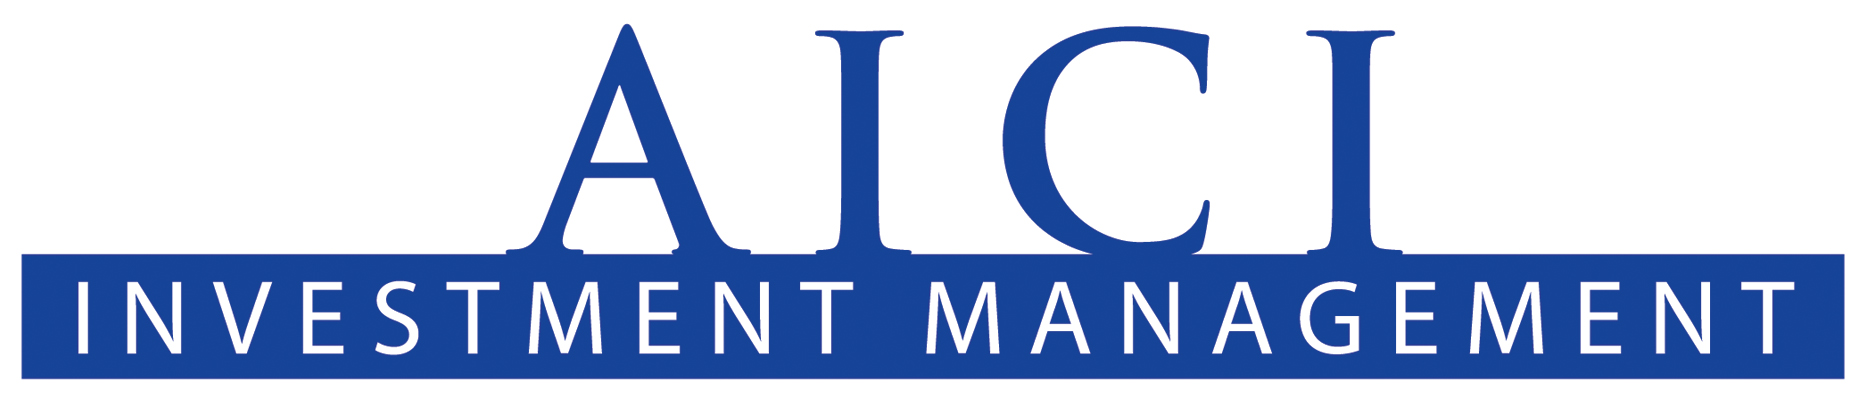 AICI Investment Management